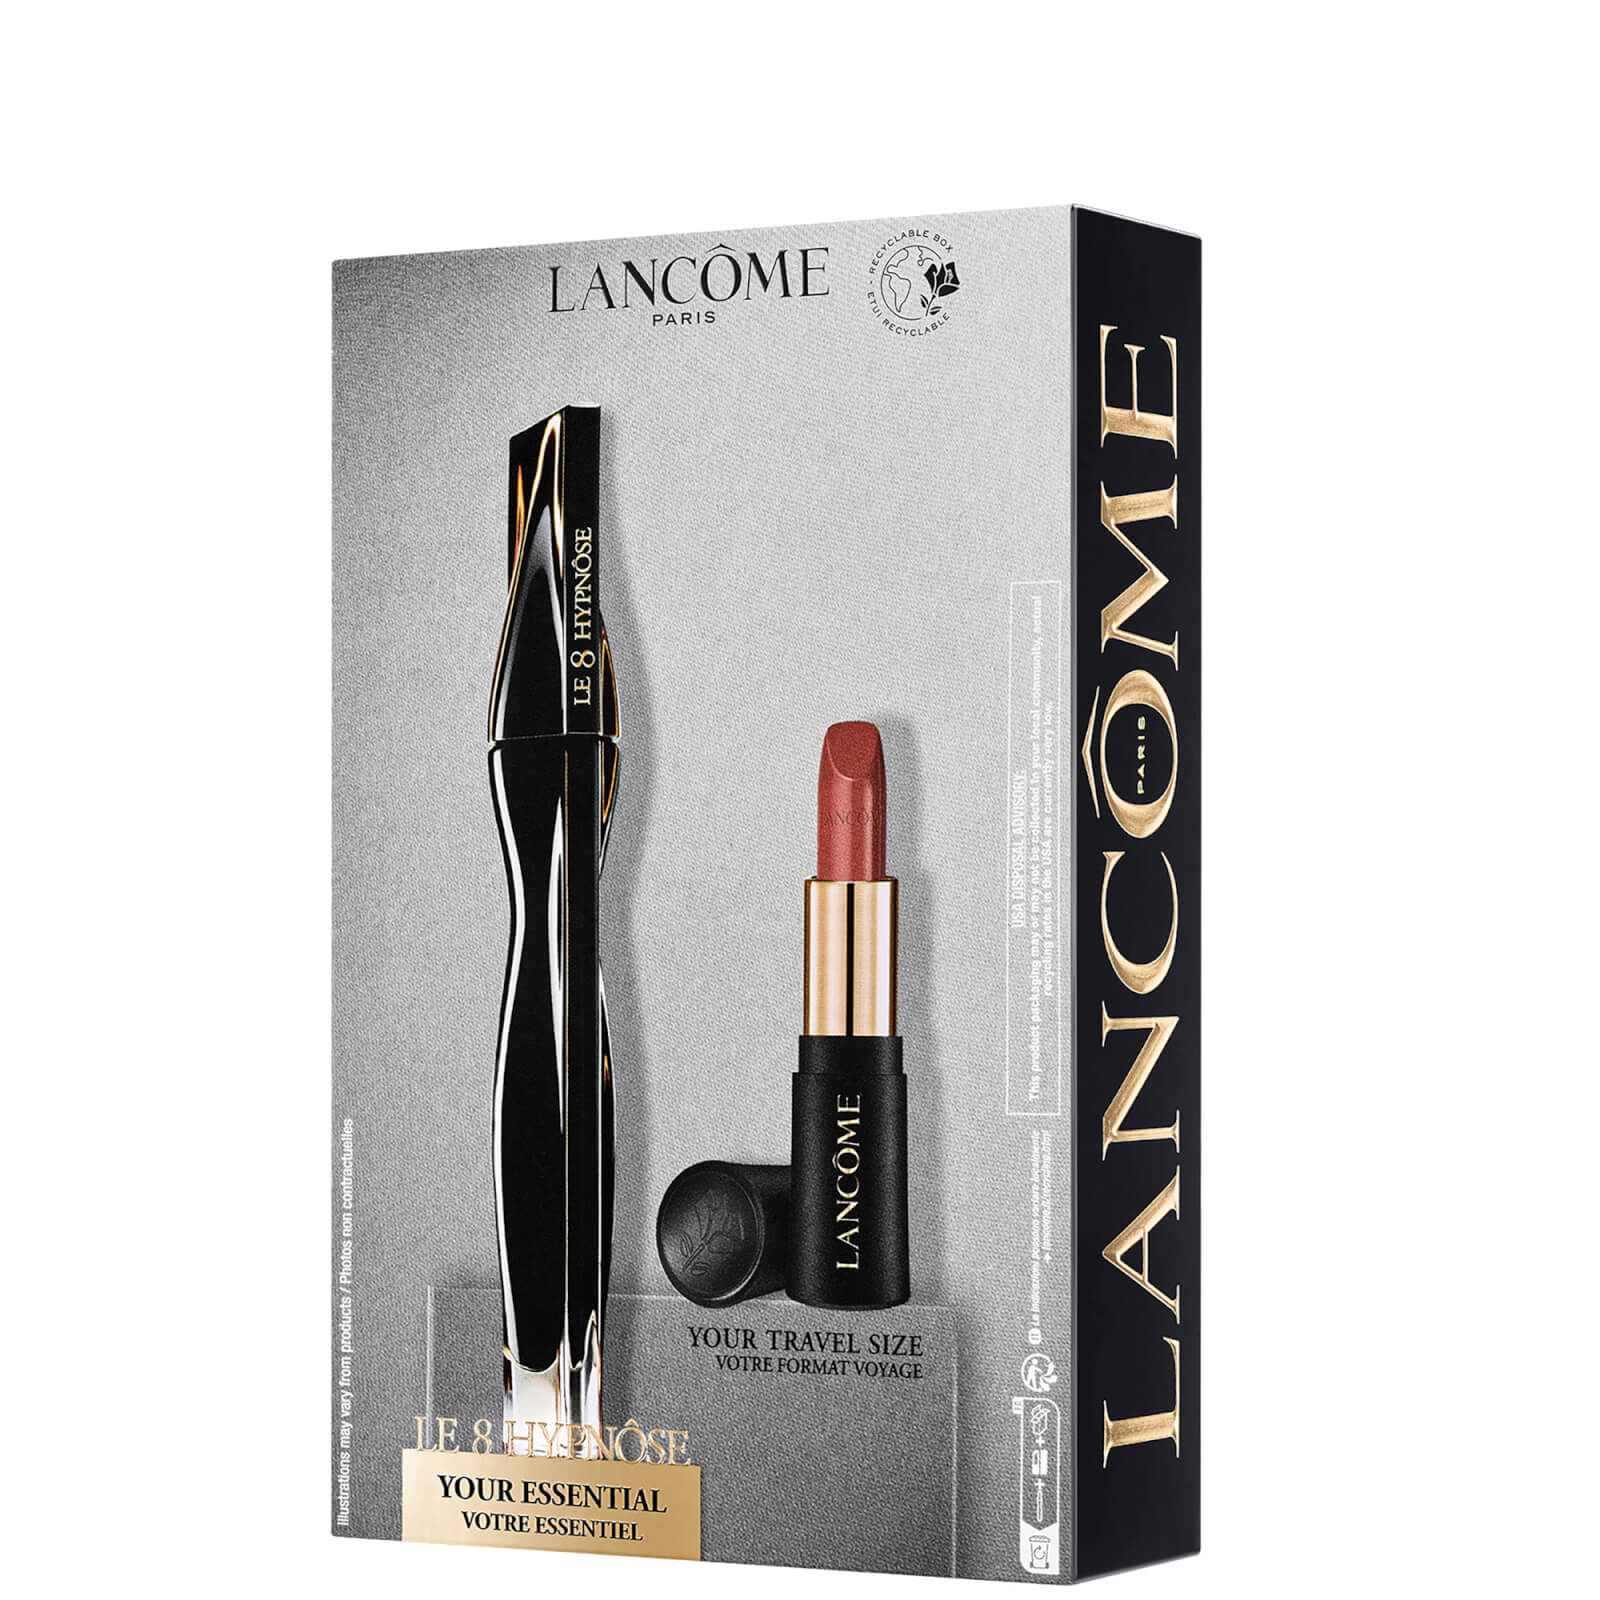 Lancôme Hypnôse Le 8 Mascara Luxury Beauty Gift Set In White